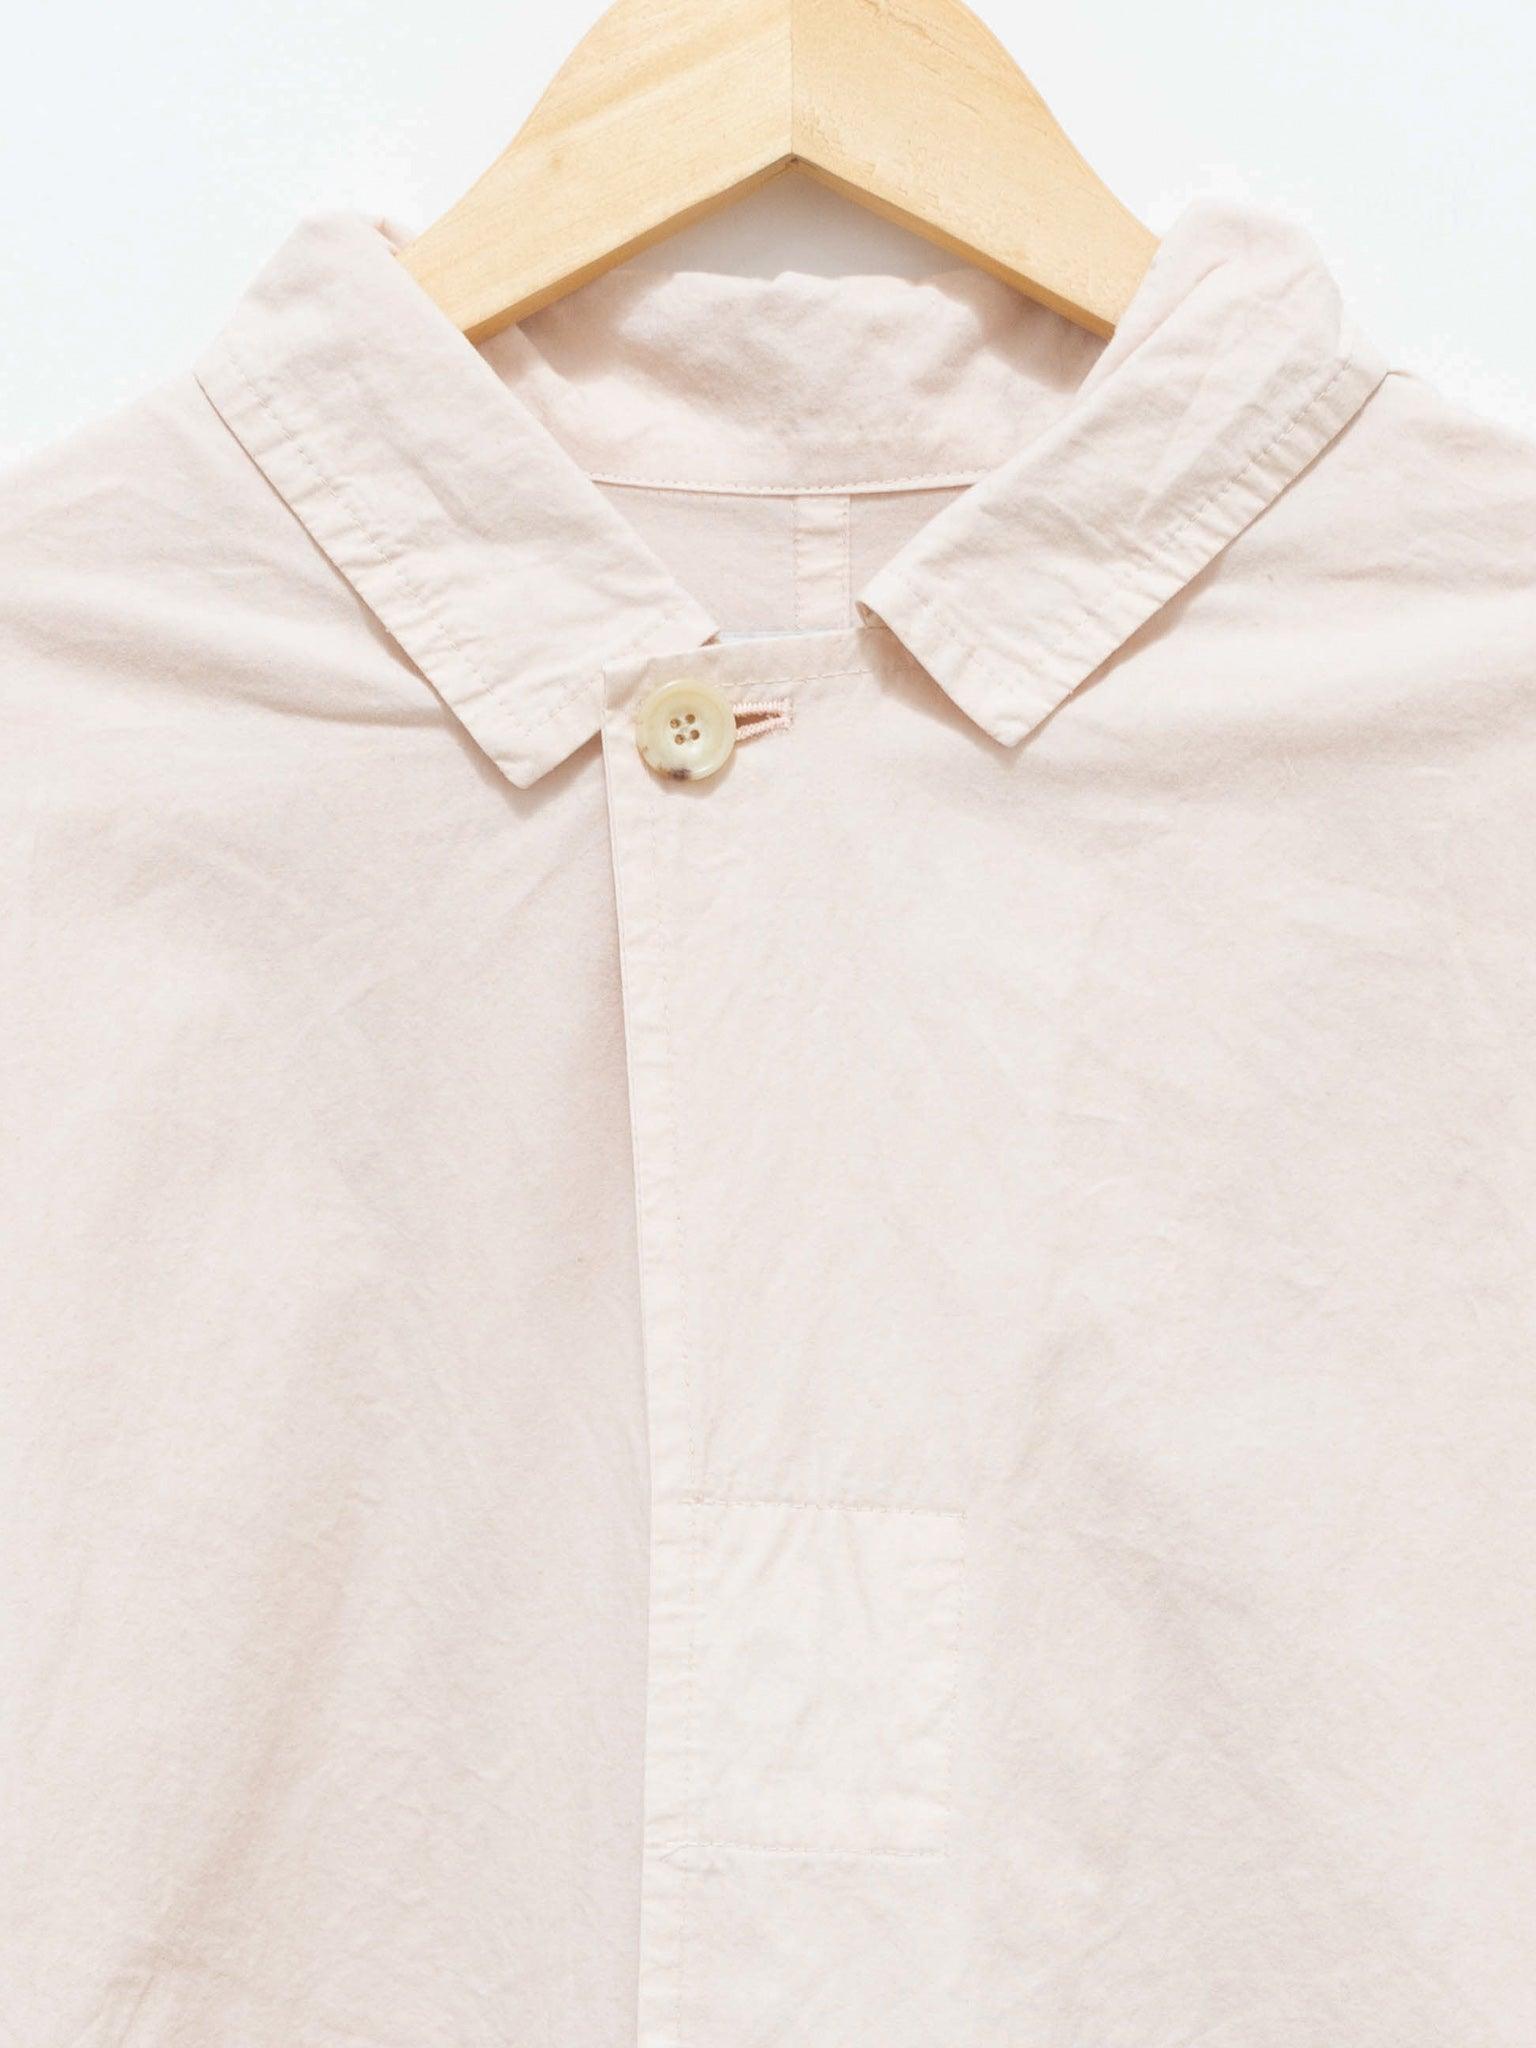 Namu Shop - Veritecoeur Gather Pocket Coat - Light Pink